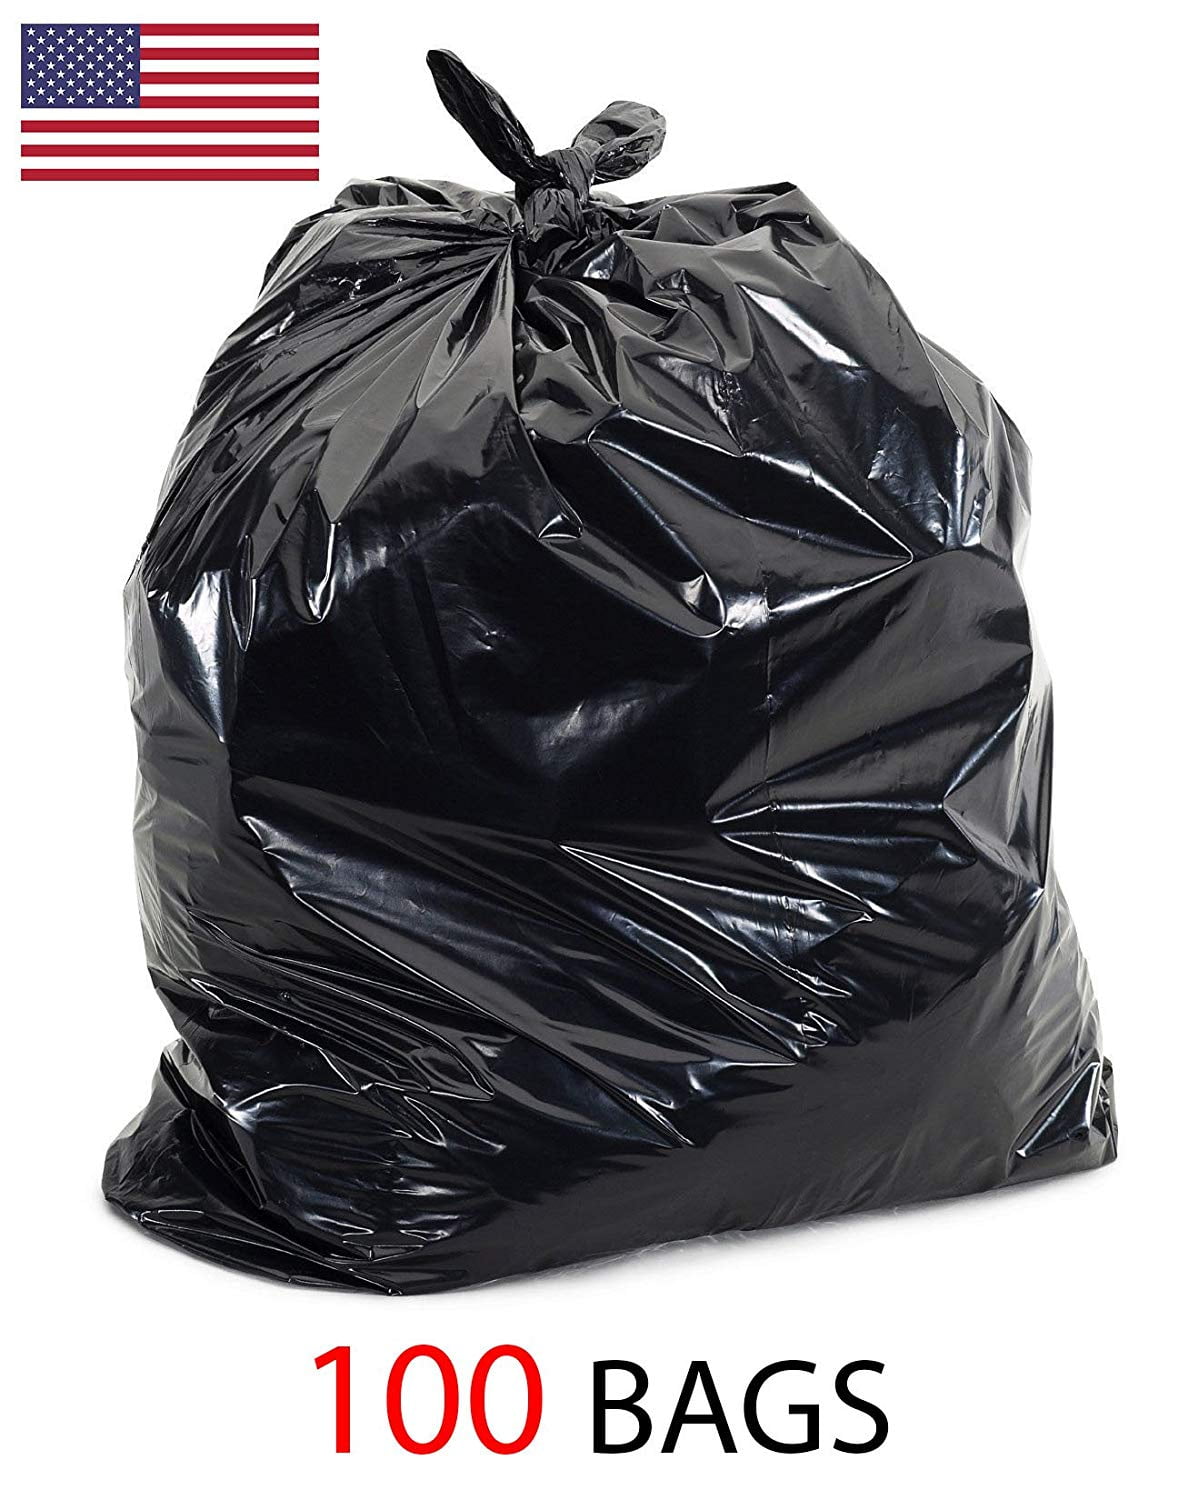 2.5 Gal Trash Bags - Made in USA - MR USA